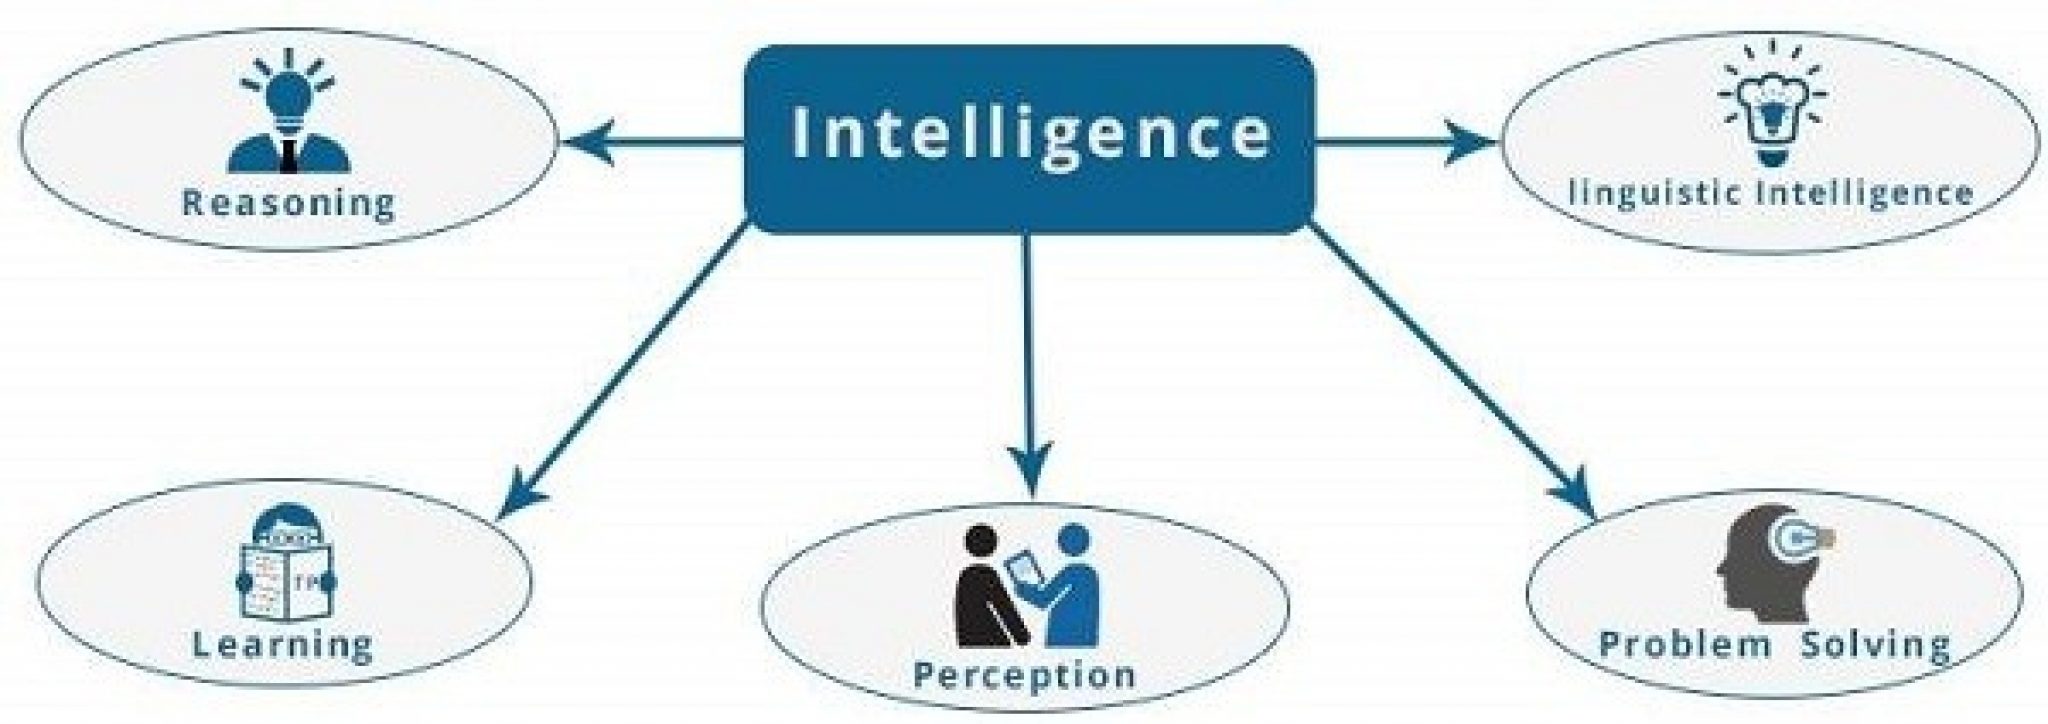 Intelligence Systems. What is Intelligence. Искусственный интеллект chat GPT. Artificial Linguistic environment. Android system intelligence для чего